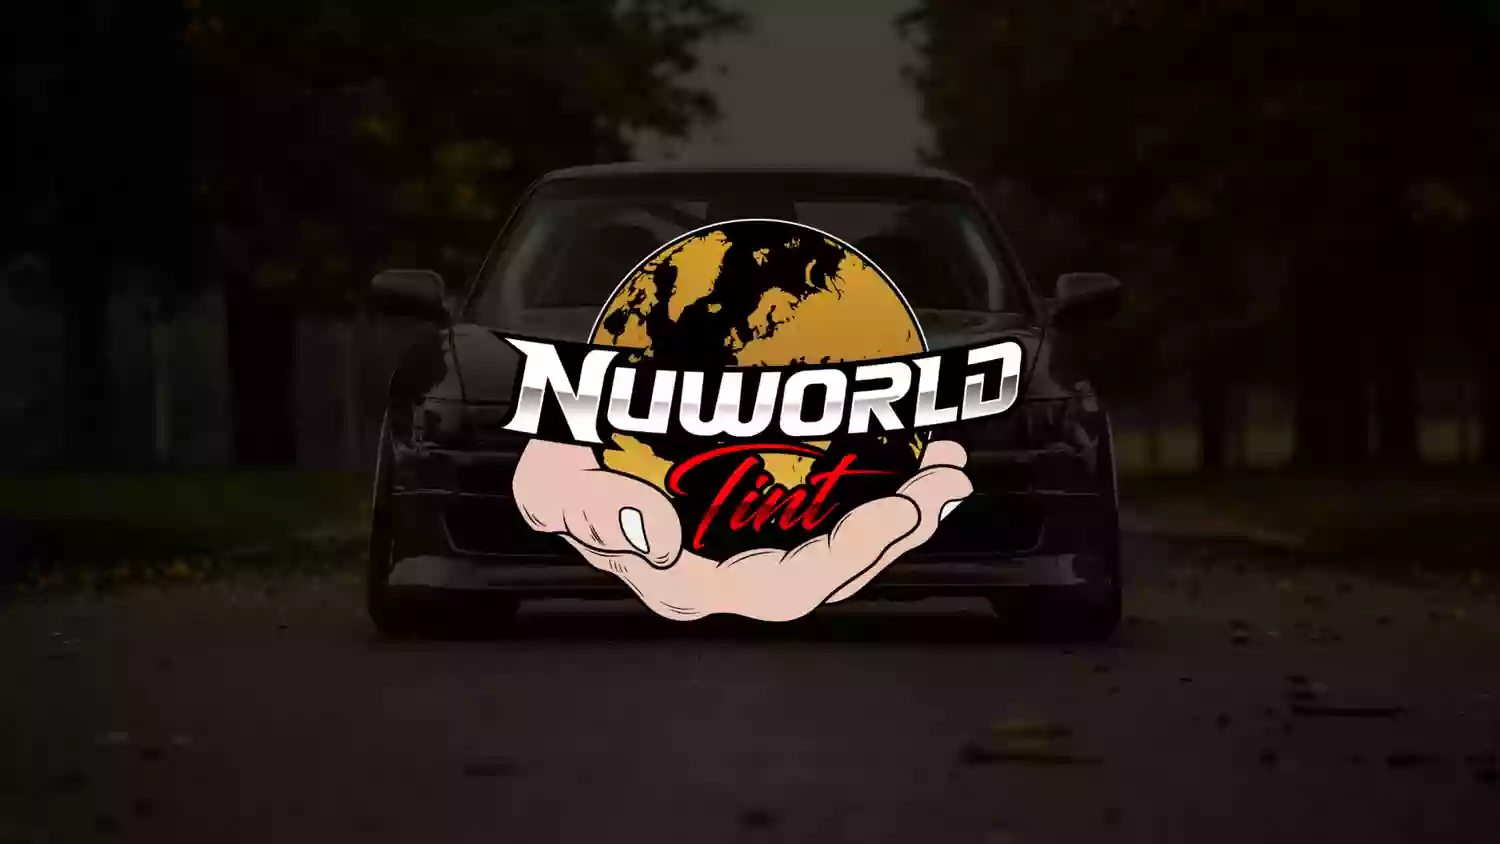 Nuworld Tint